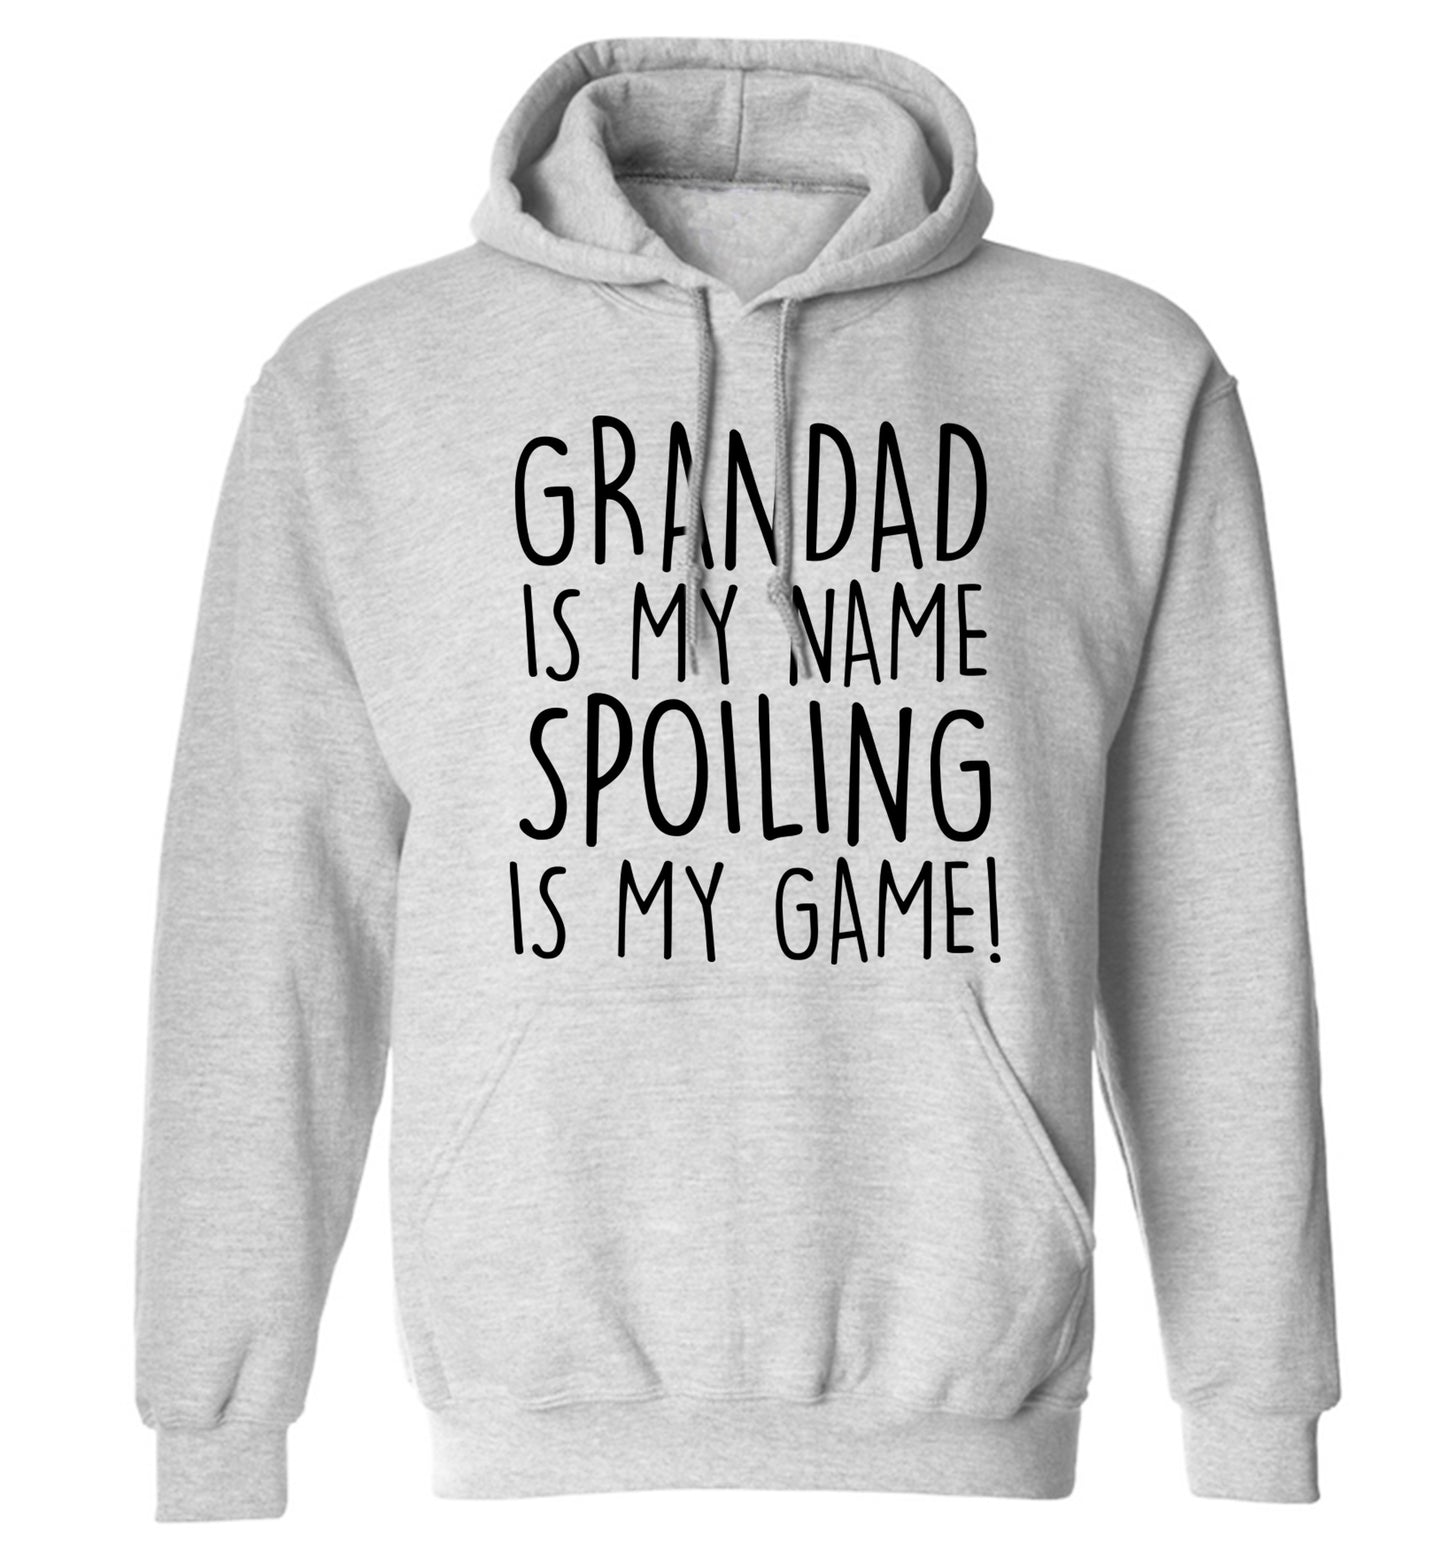 Grandad is my name, spoiling is my game adults unisex grey hoodie 2XL